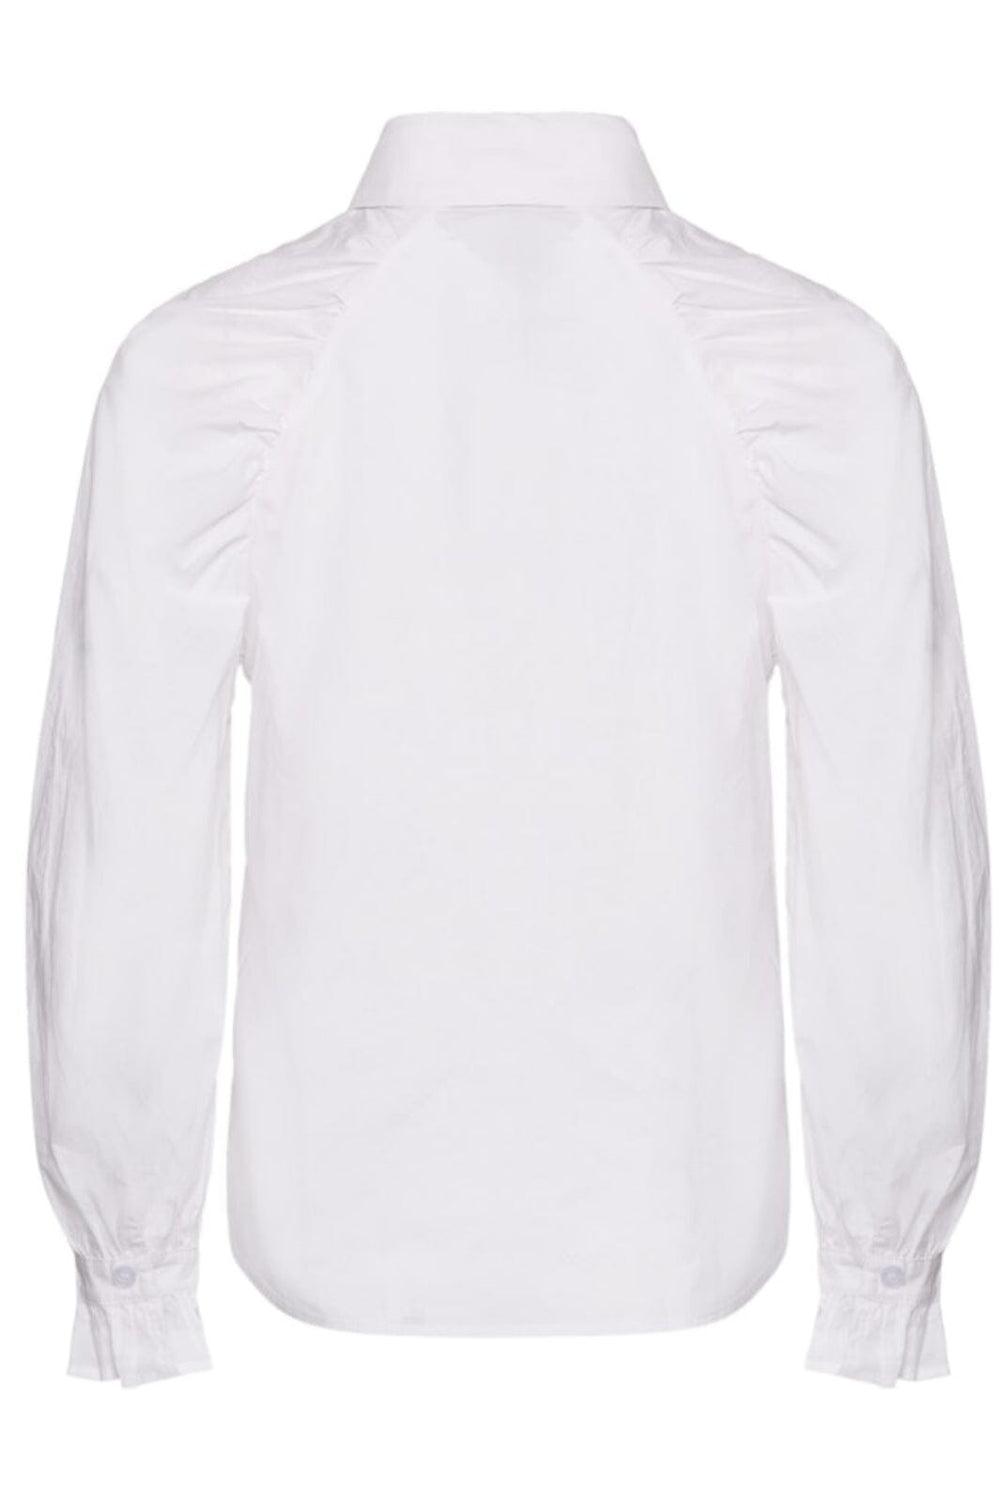 Noella - Rynn Shirt - White Skjorter 